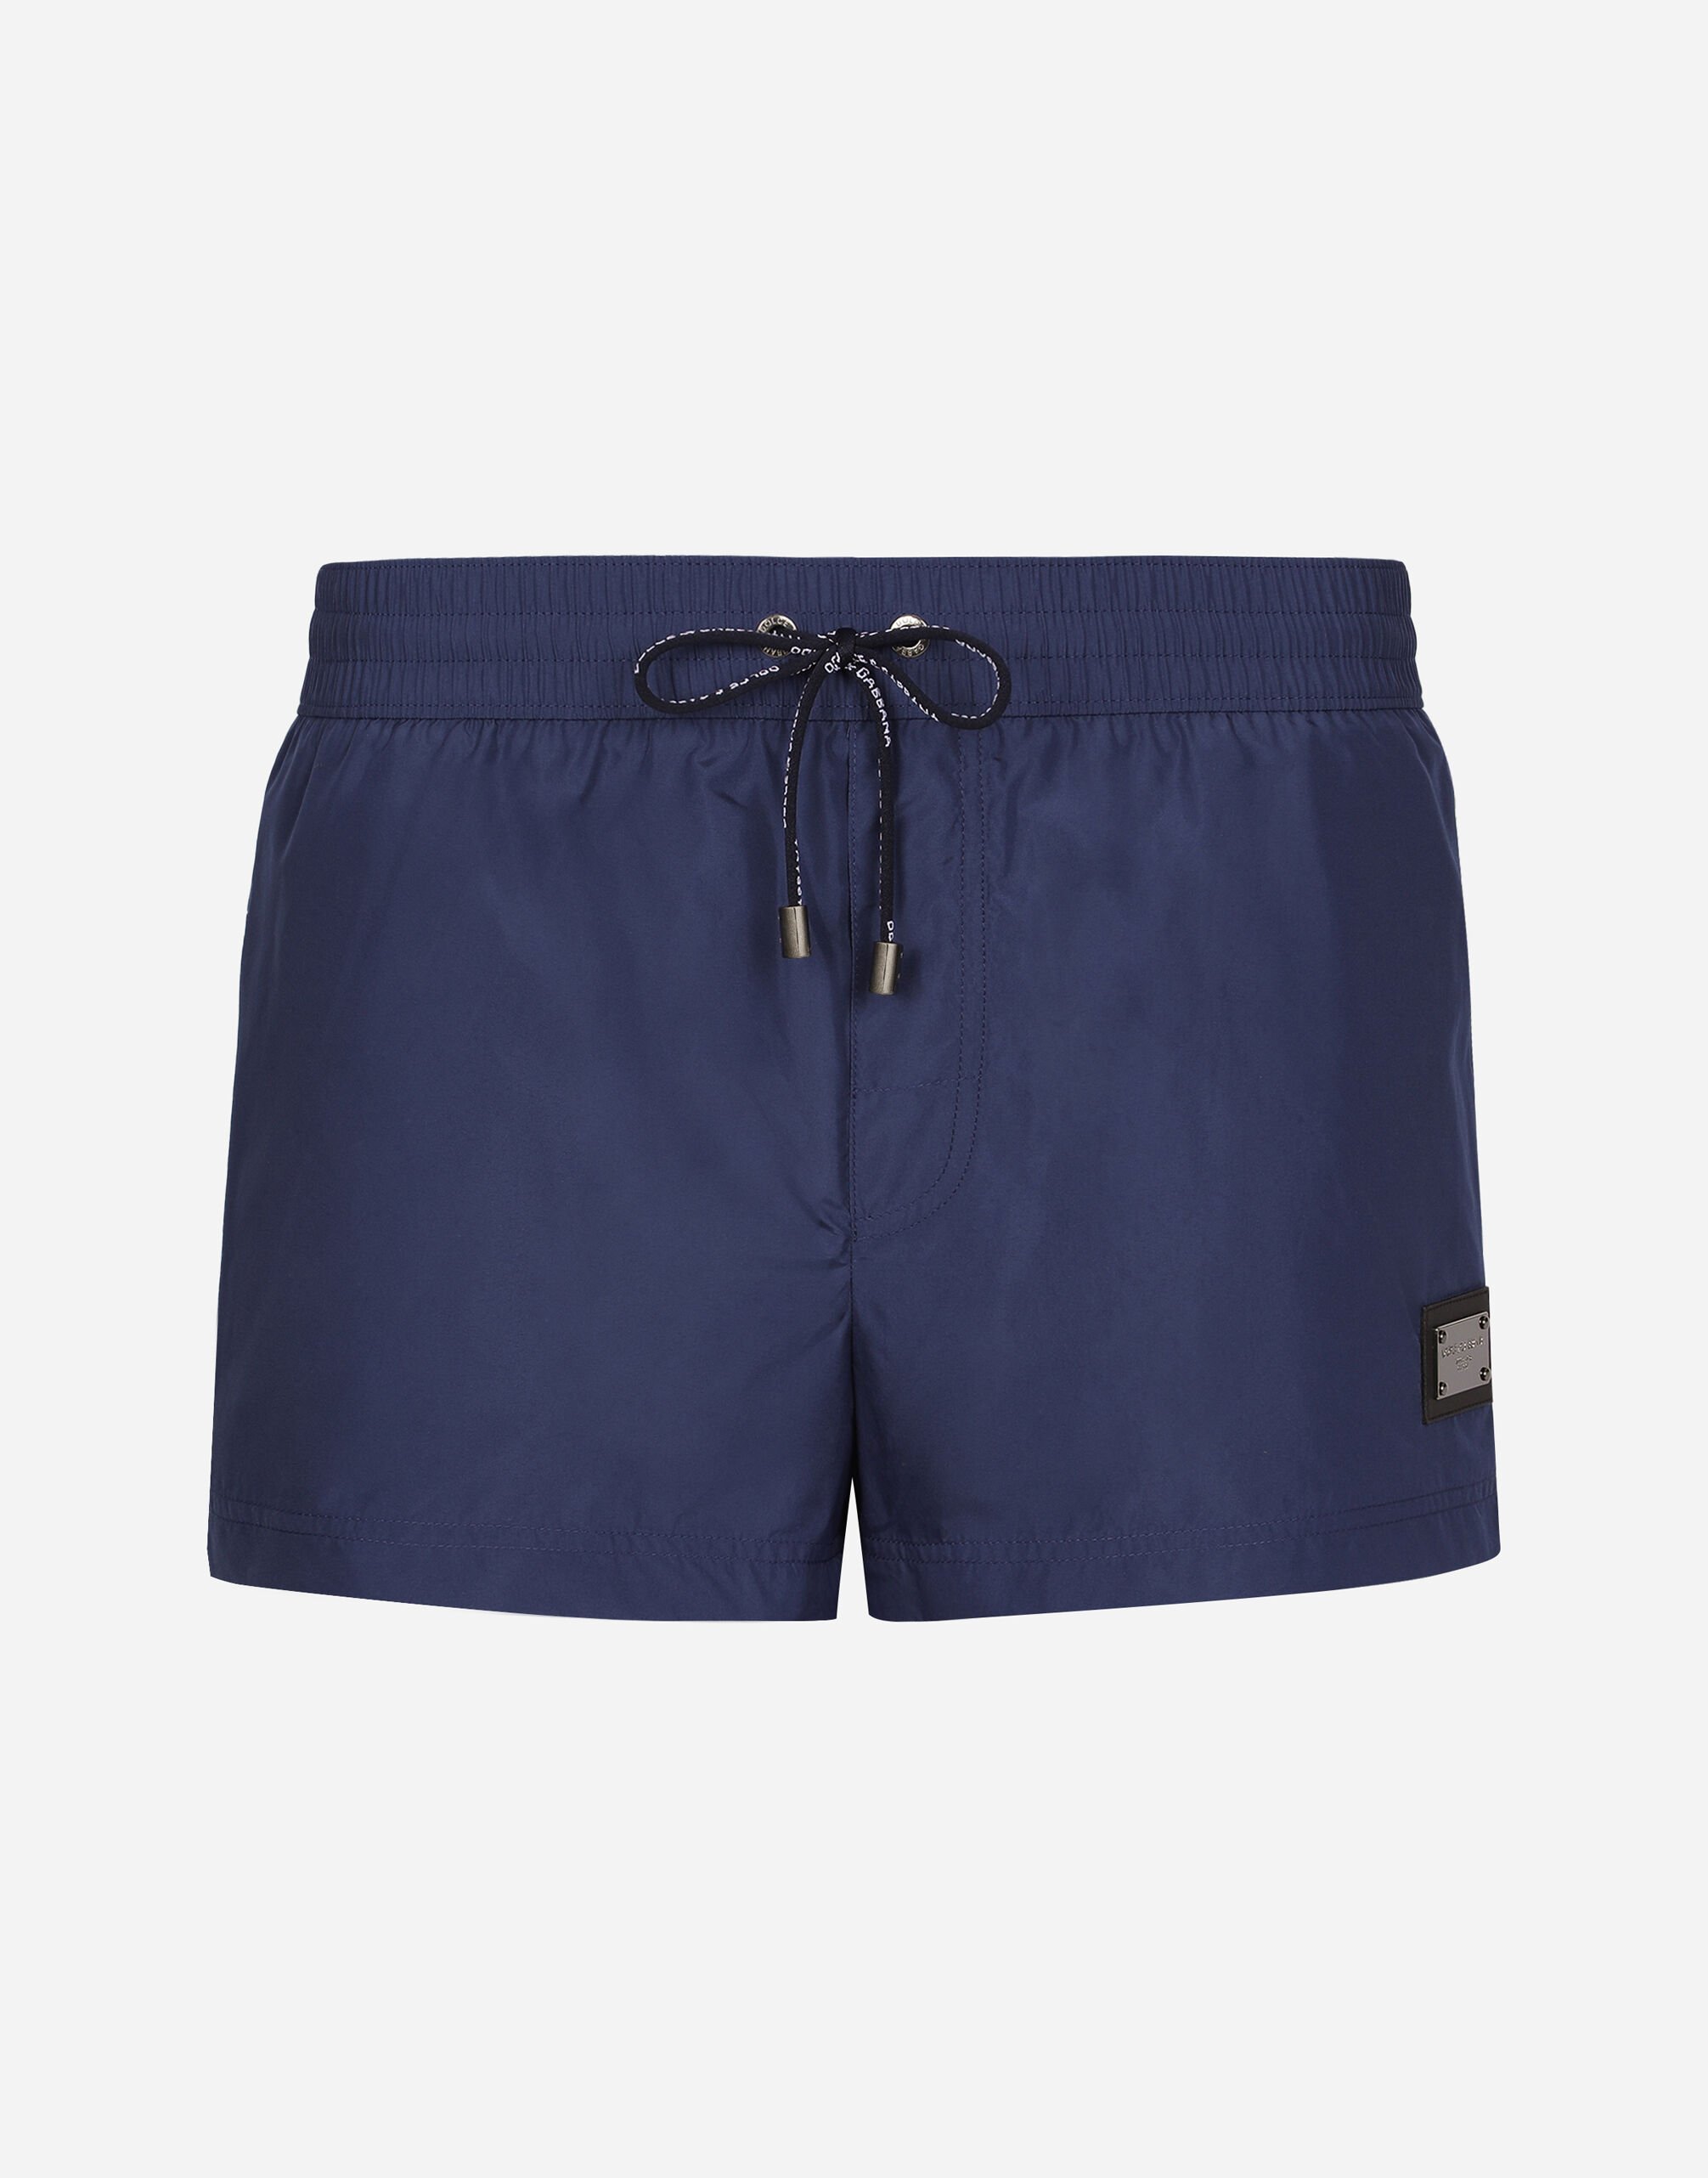 Dolce & Gabbana Short swim trunks with branded tag Blue M4E45TONO06